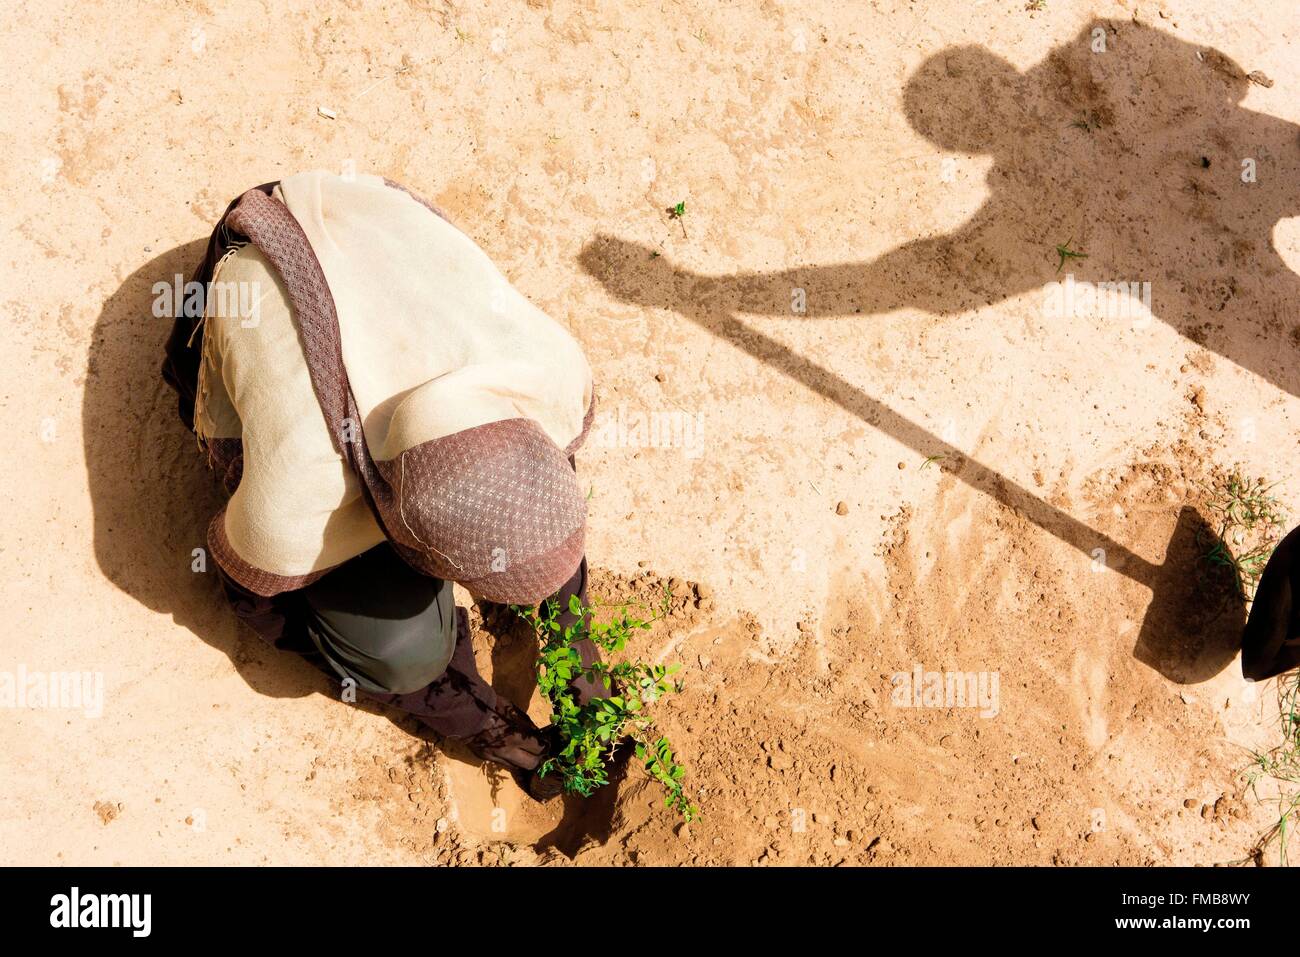 Senegal, Sahel, Ferlo region, Widou Thiengoly, planting acacia aegyptiaca Stock Photo